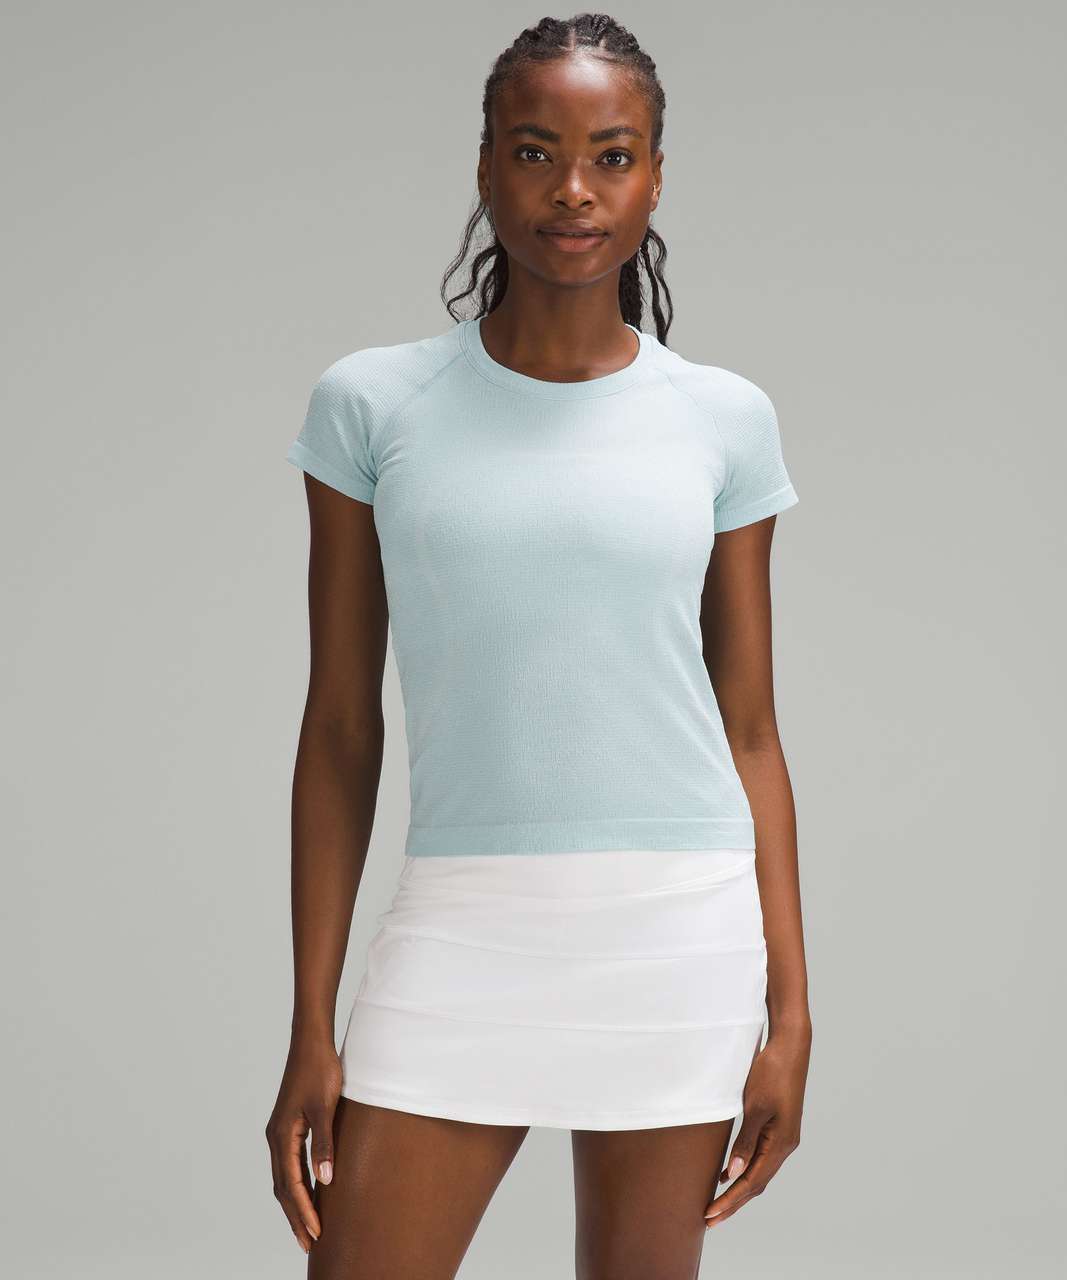 Lululemon Swiftly Tech Short-Sleeve Shirt 2.0 *Race Length - 144100101